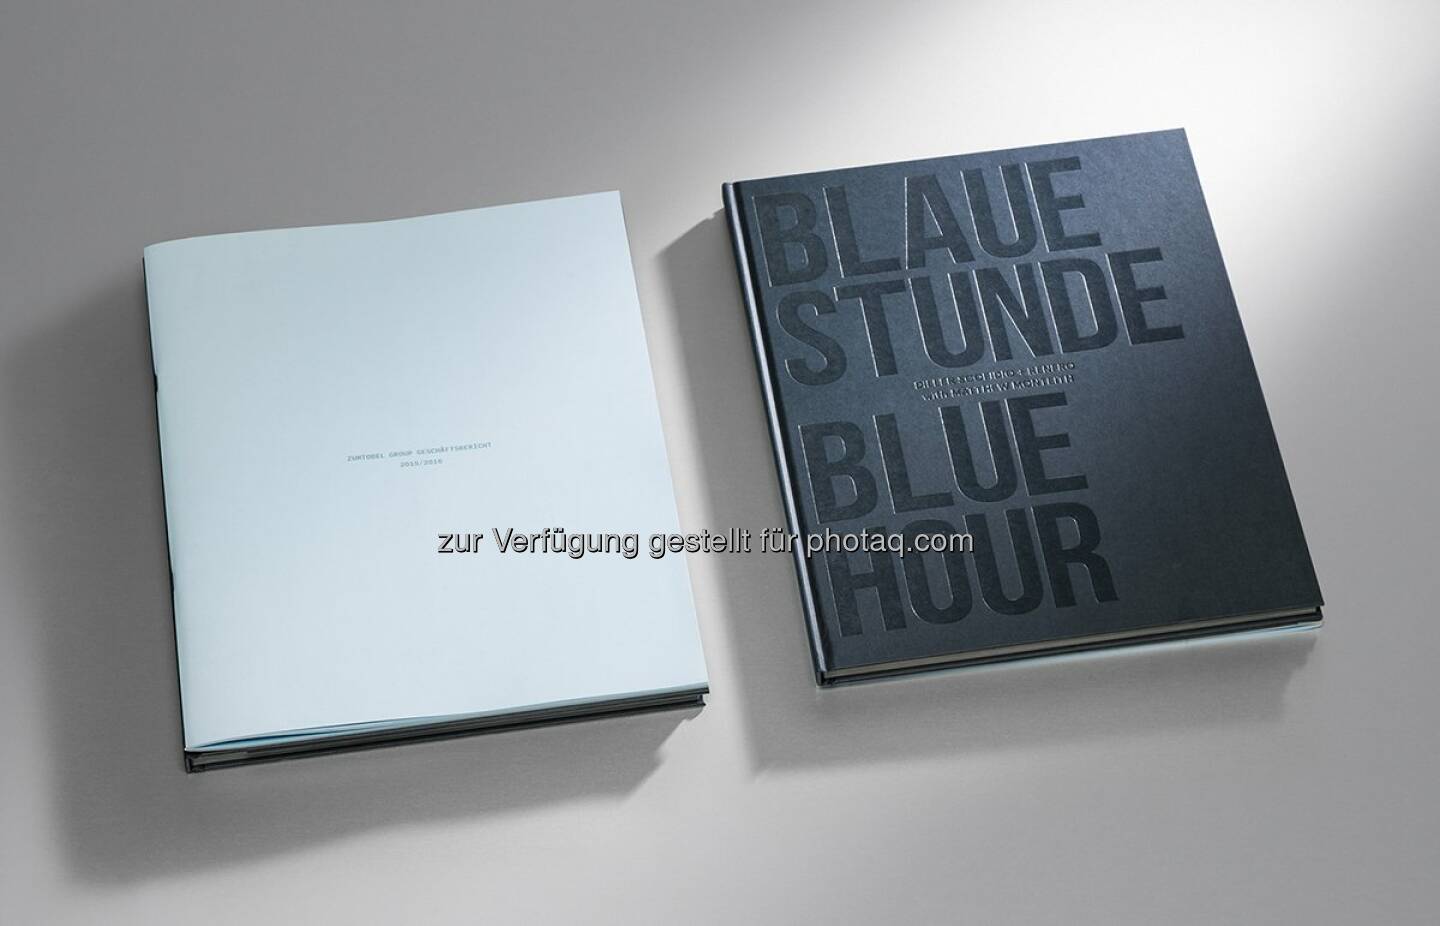 Zumtobel: We are proud to present this years artistic annual report designed by Diller Scofidio+Renfro https://t.co/9DlpHtN1bR http://twitter.com/zumtobelgroup/status/757859909627150336/photo/1  Source: http://facebook.com/zumtobelgroup